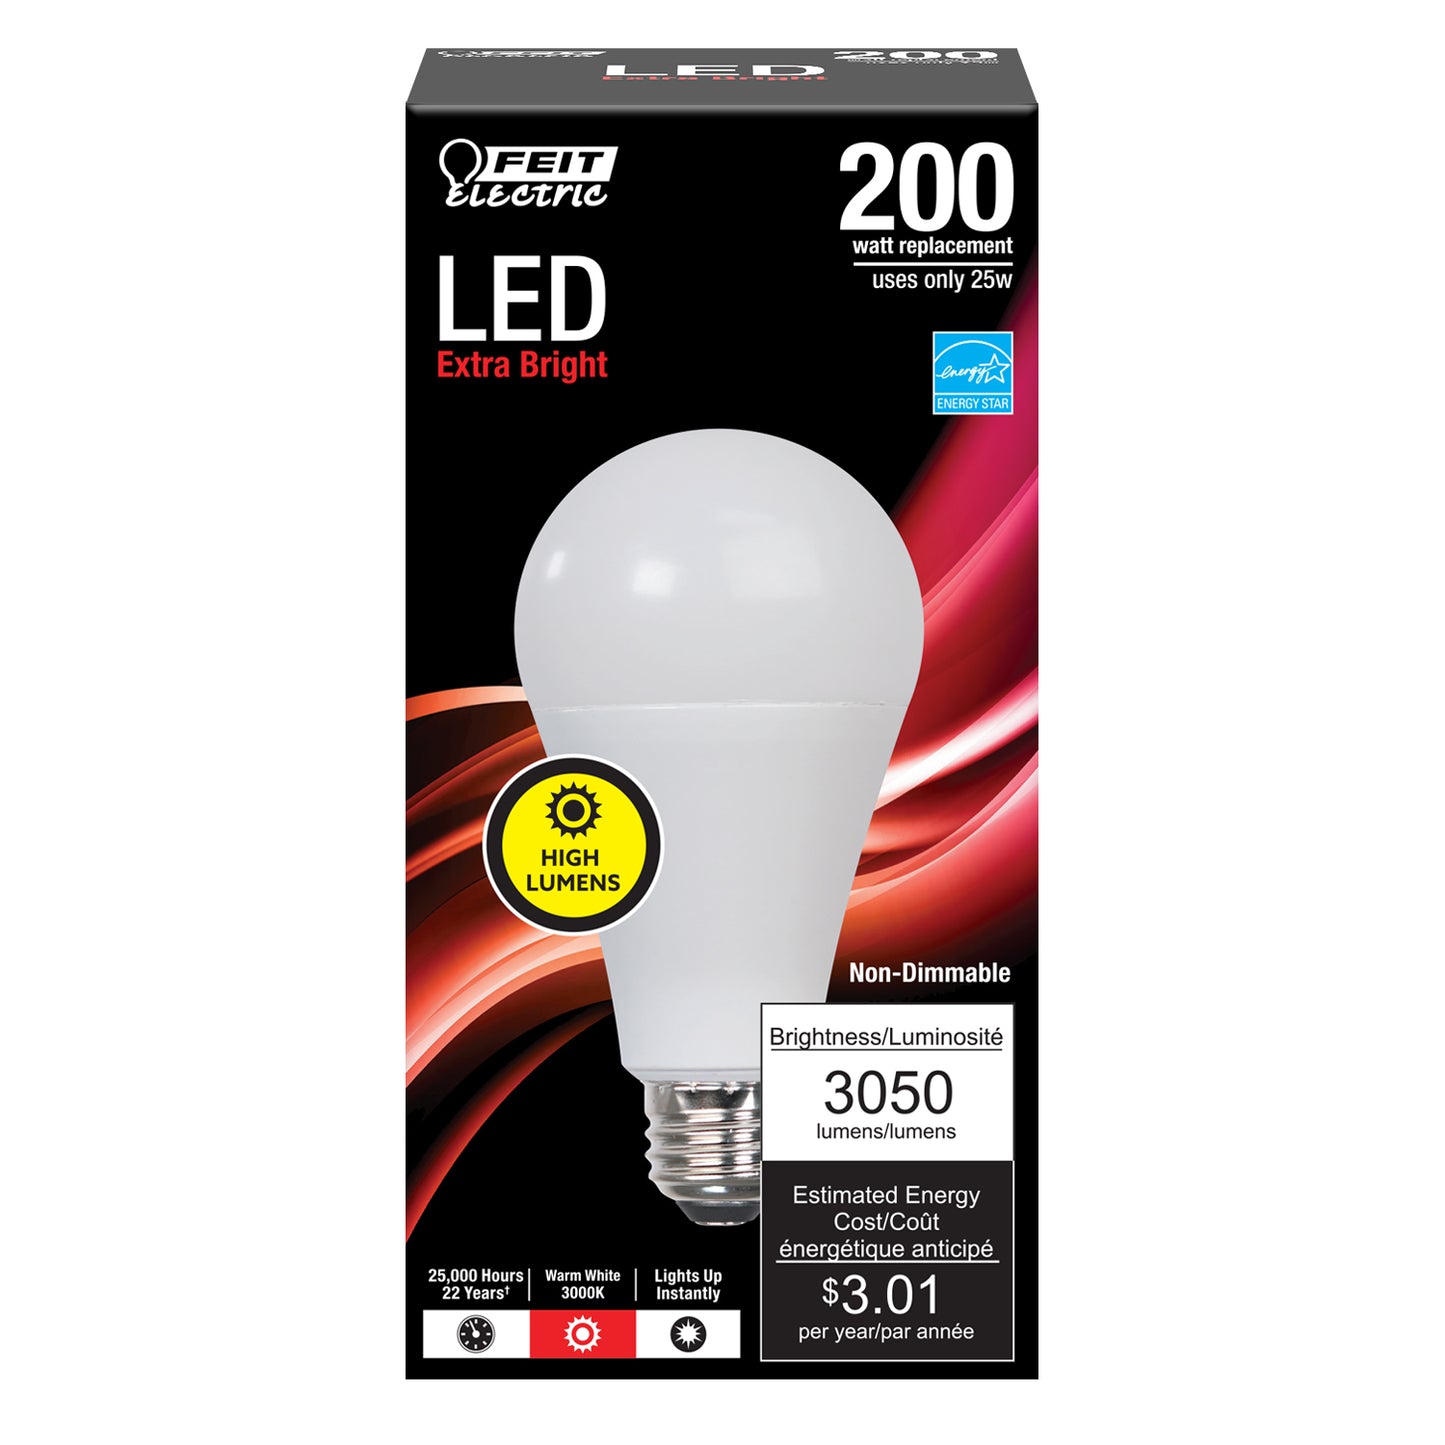 3050 Lumen 3000K Non-Dimmable LED